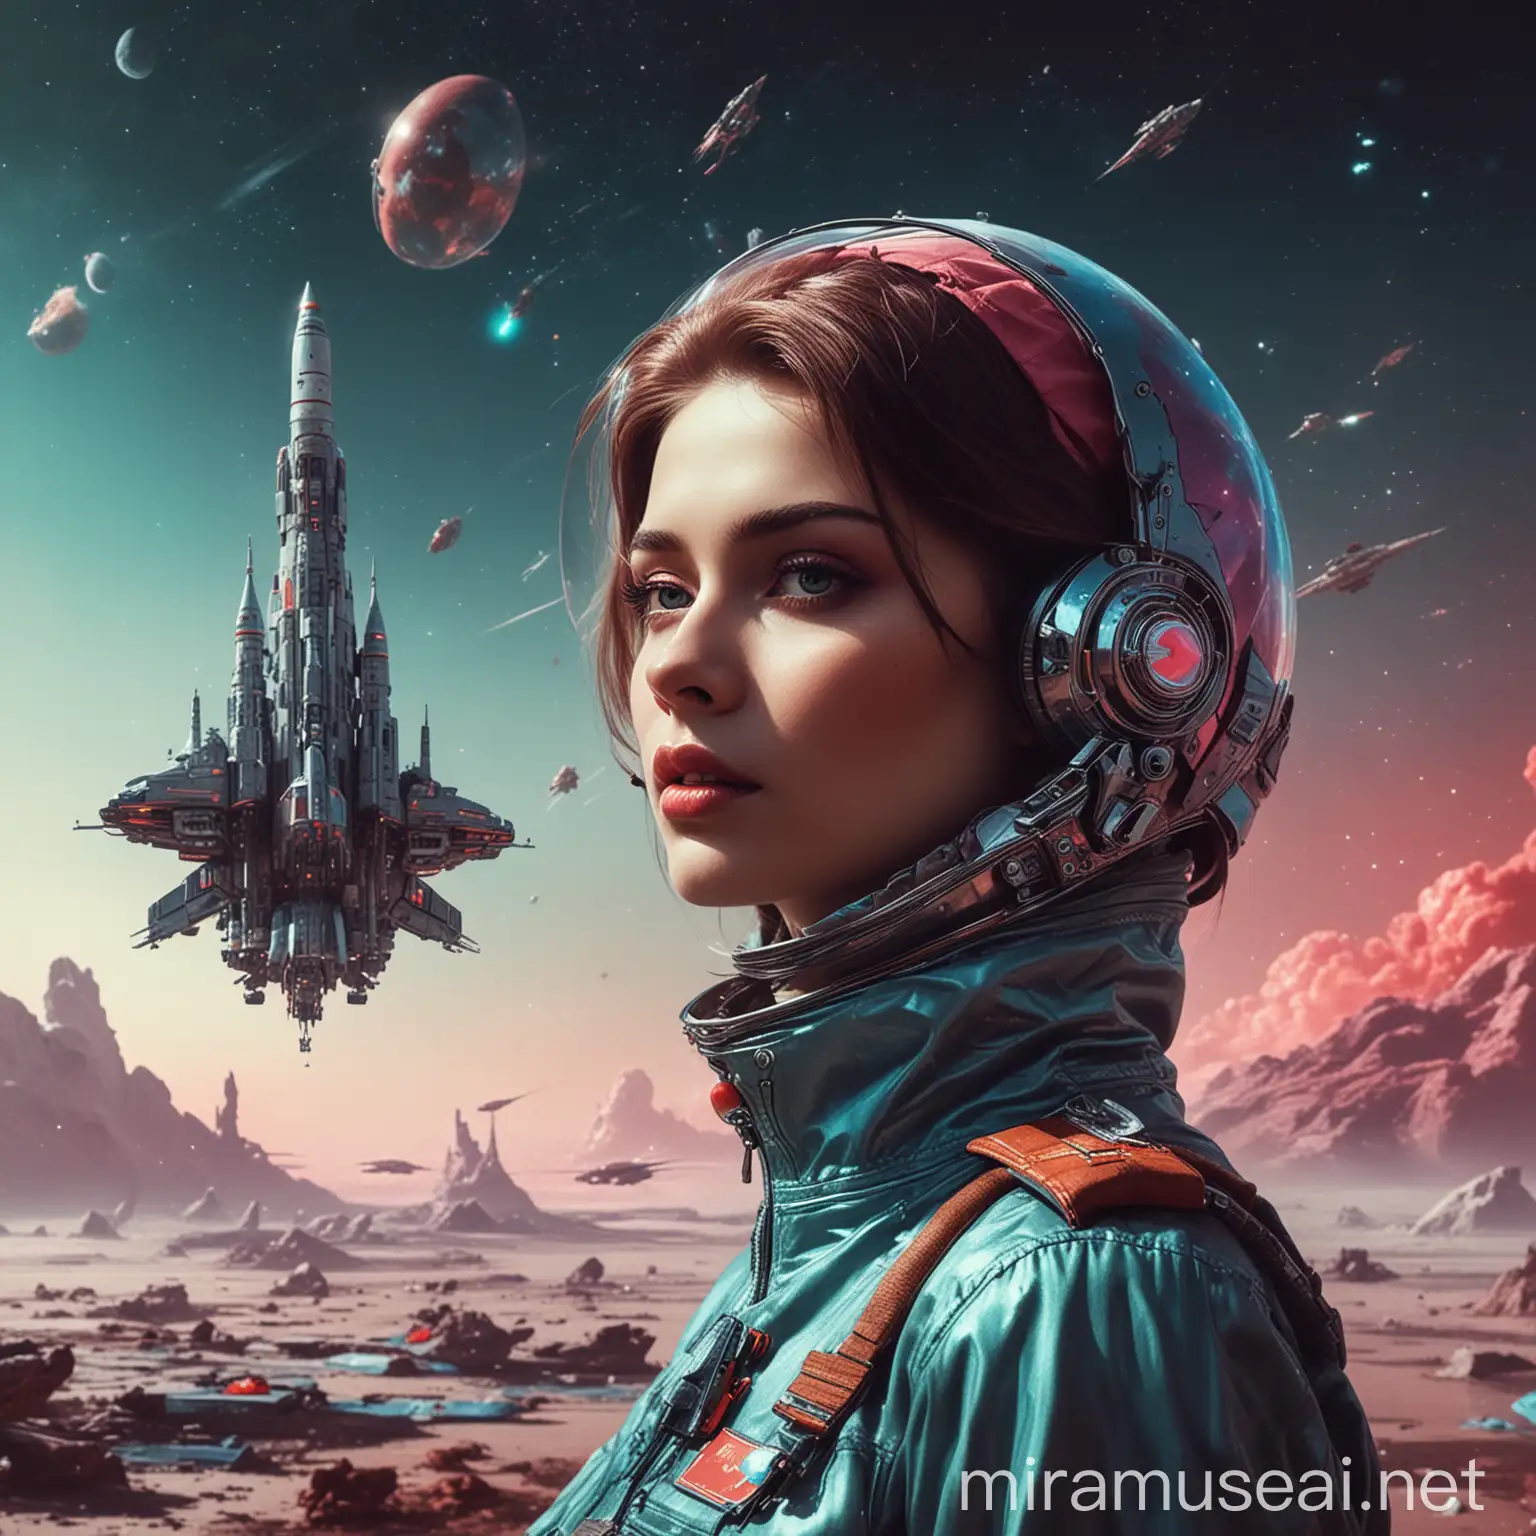 Colorful Retro Futuristic Soviet Heroine Dream Odyssey with Spaceships